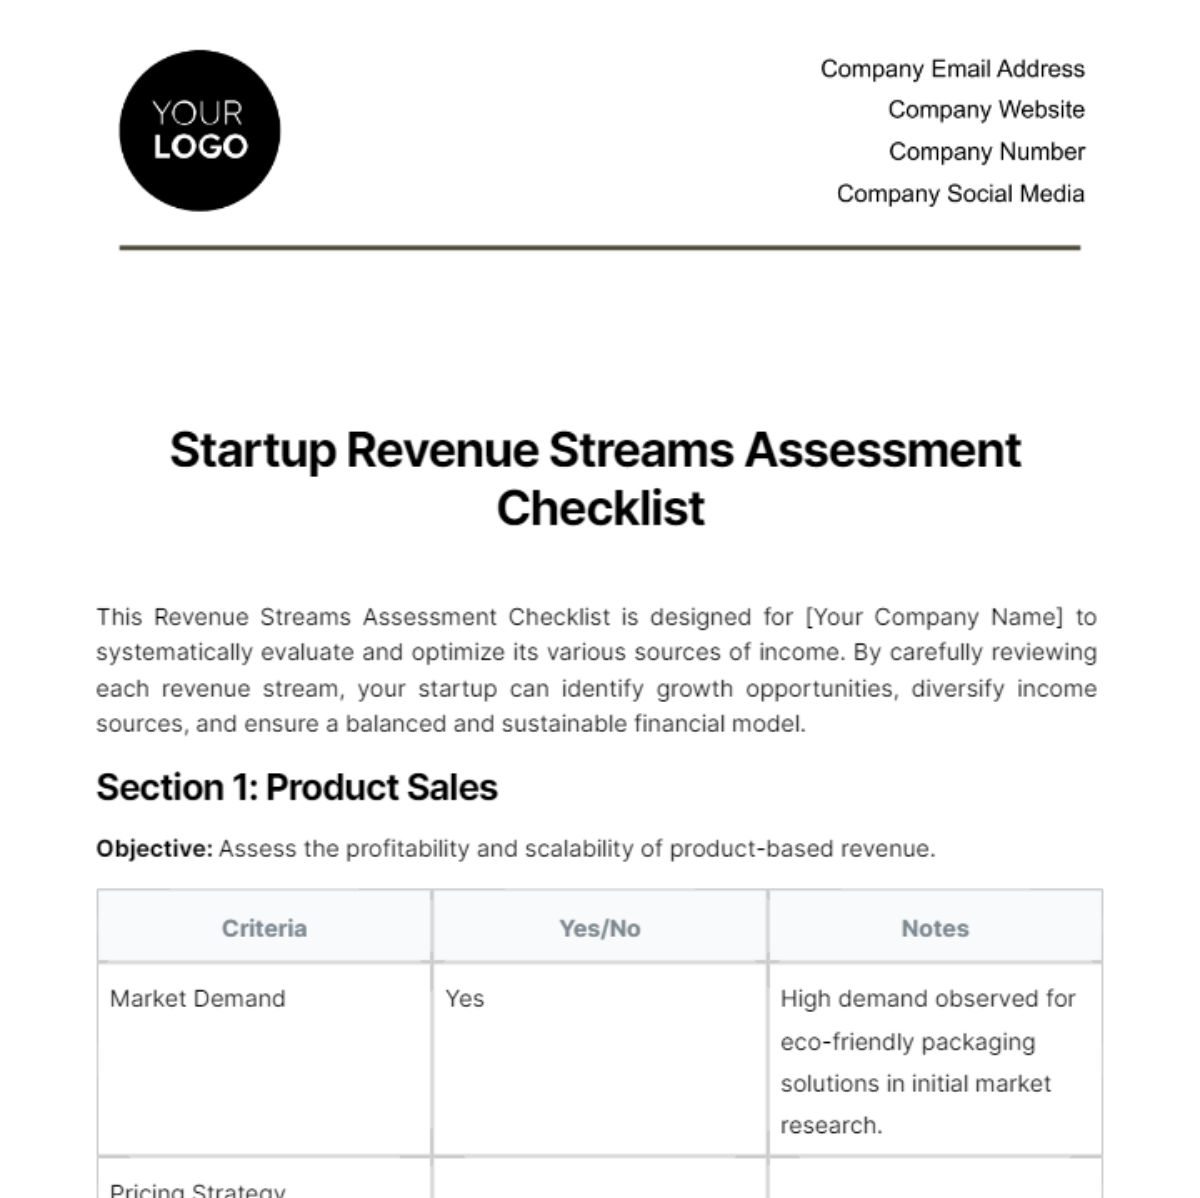 Startup Revenue Streams Assessment Checklist